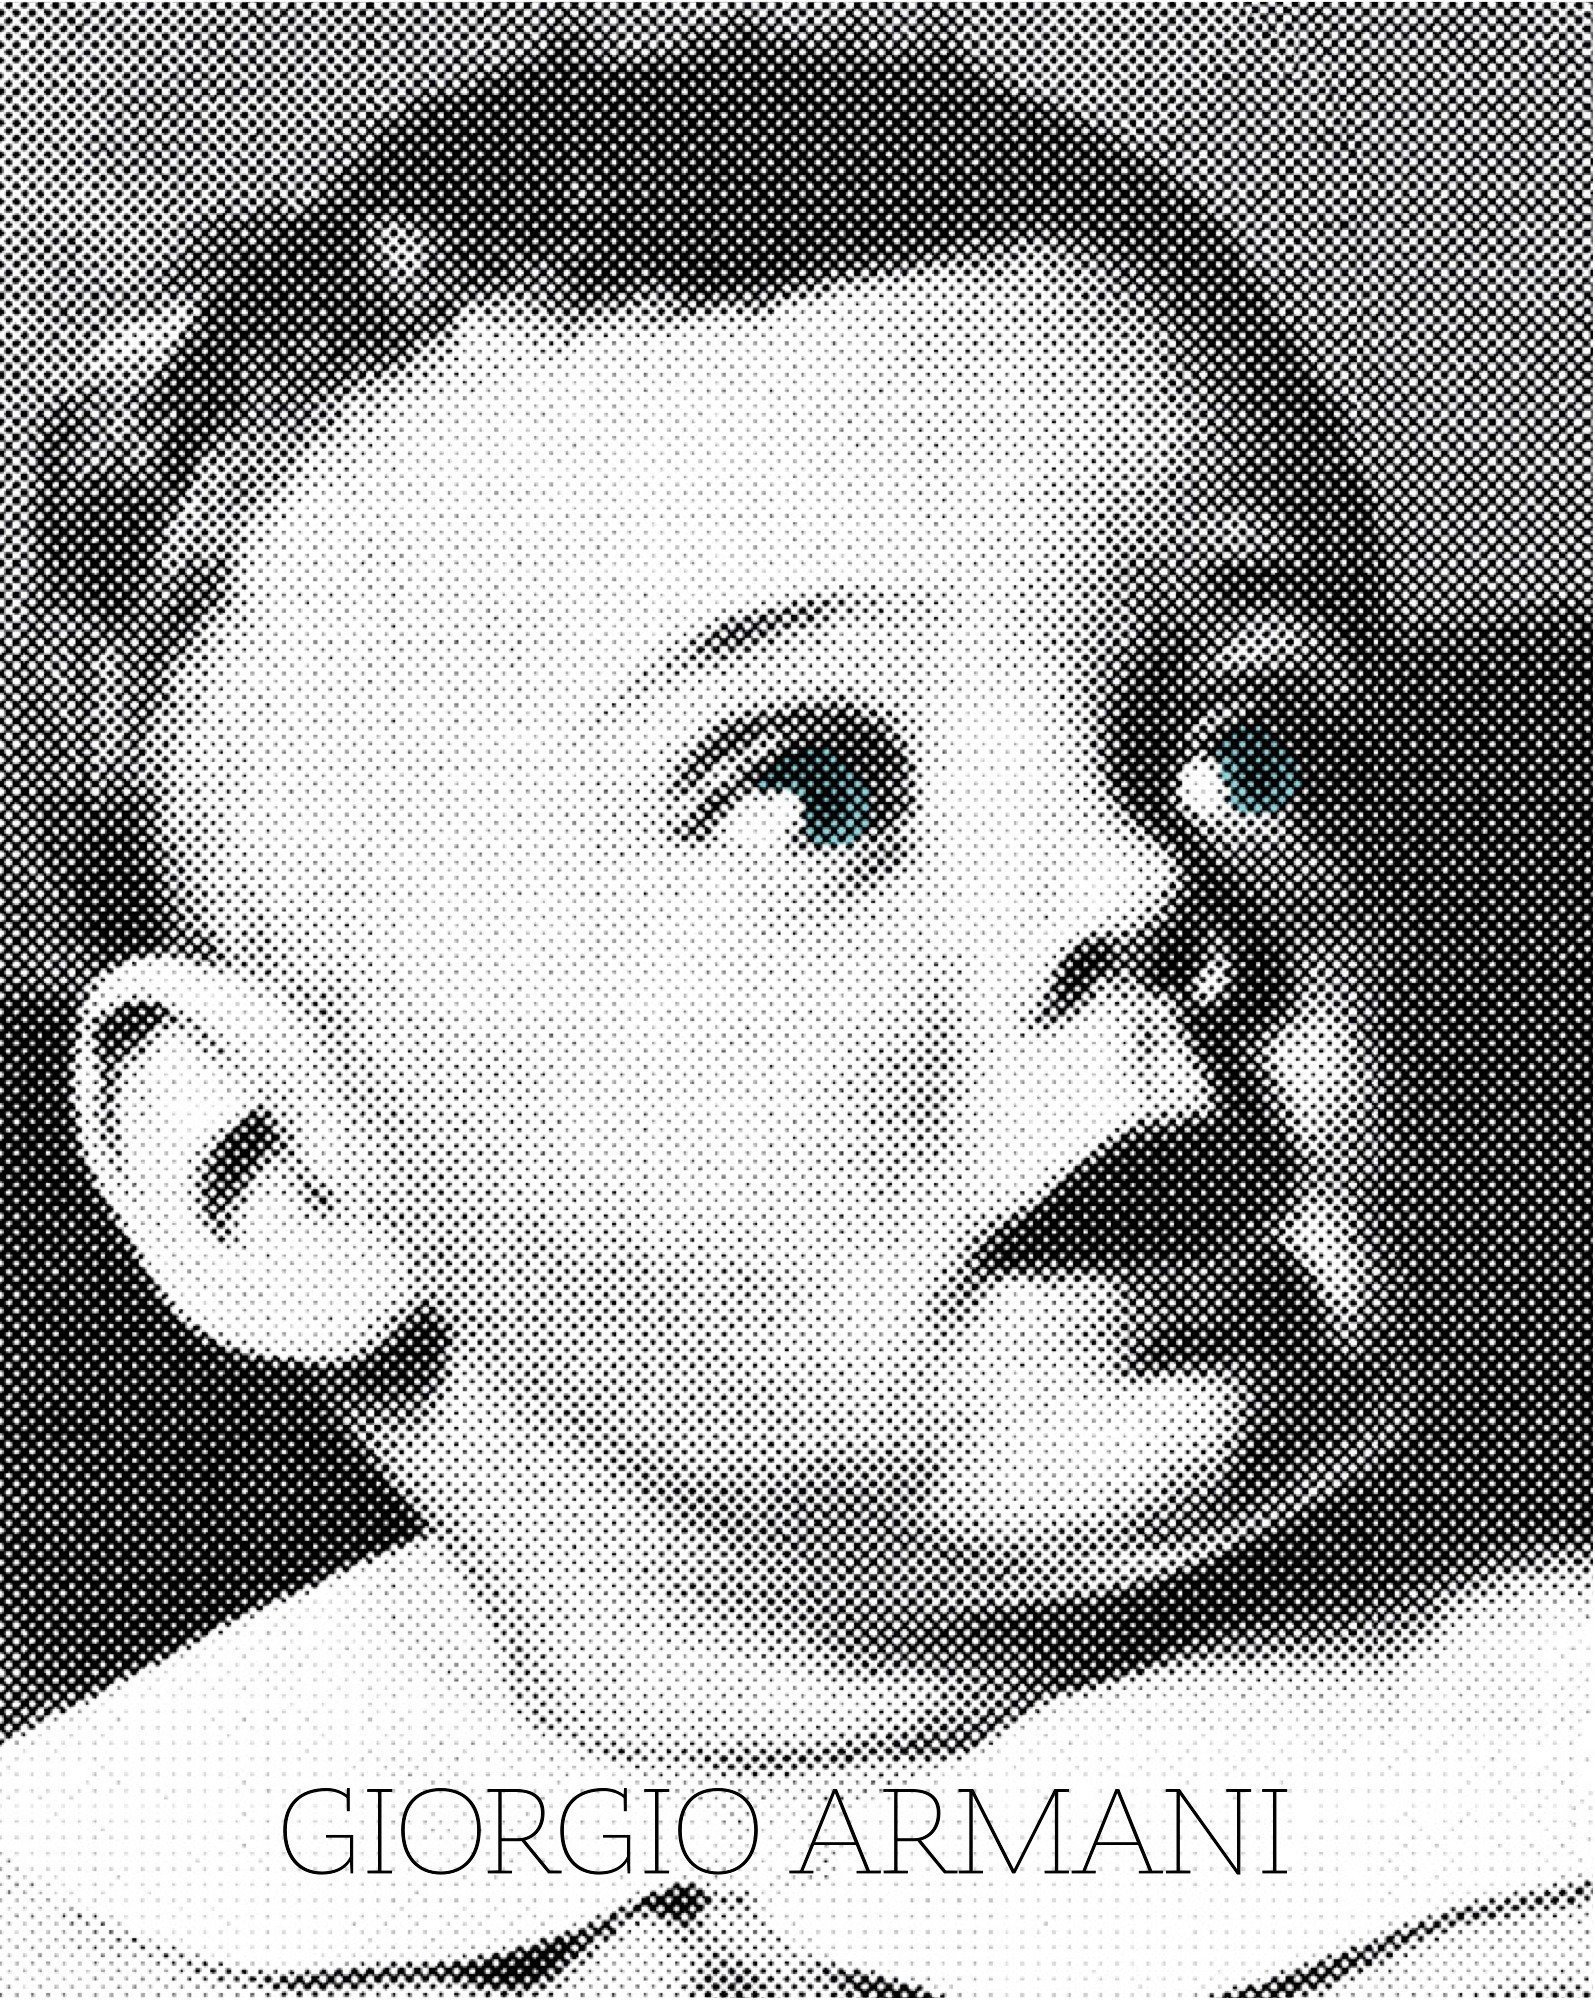 Giorgio Armani de bebé, portada de su libro biográfico de 2015 (Rizzoli).